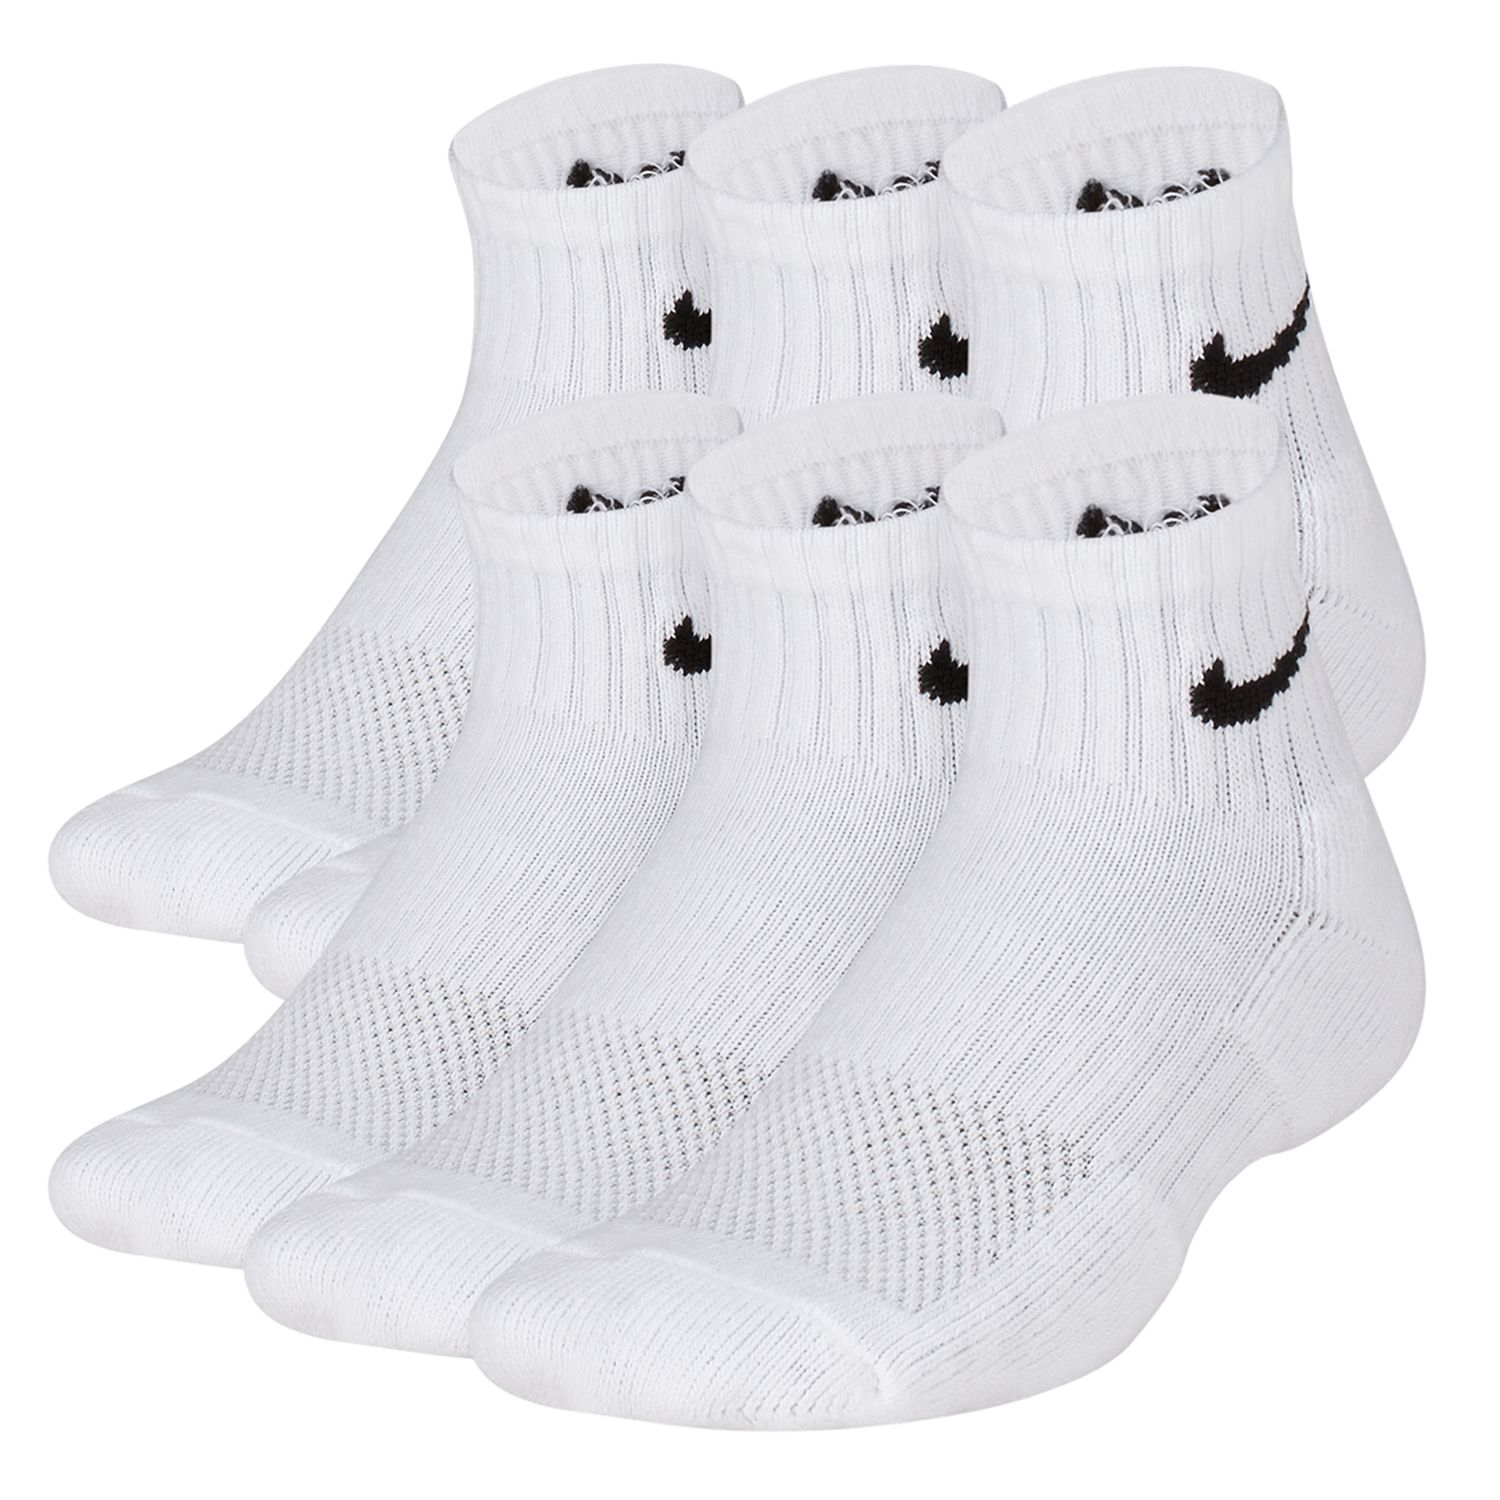 boys black nike socks